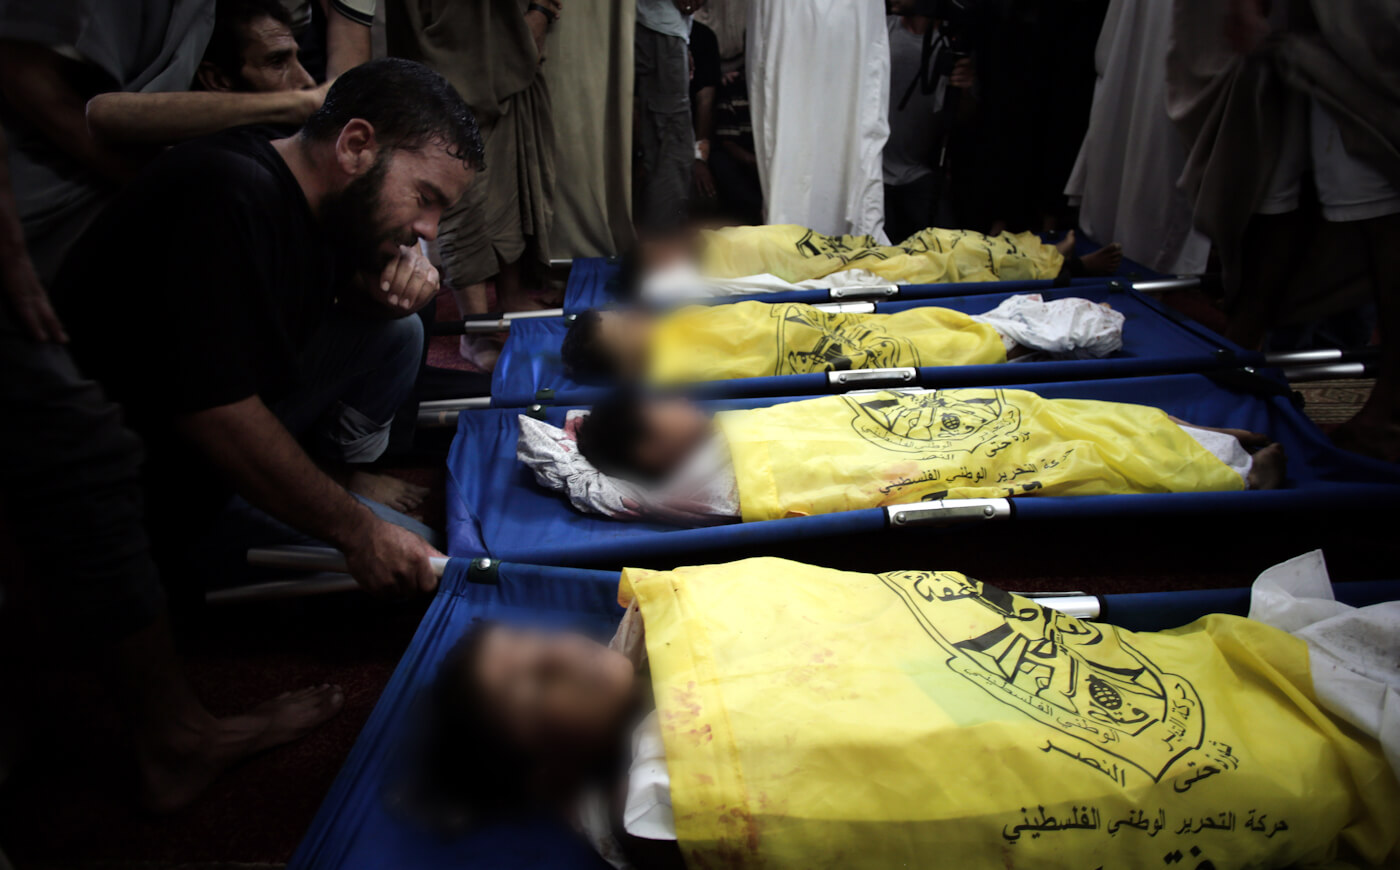 Bakr family Israeli airstrike feature photo